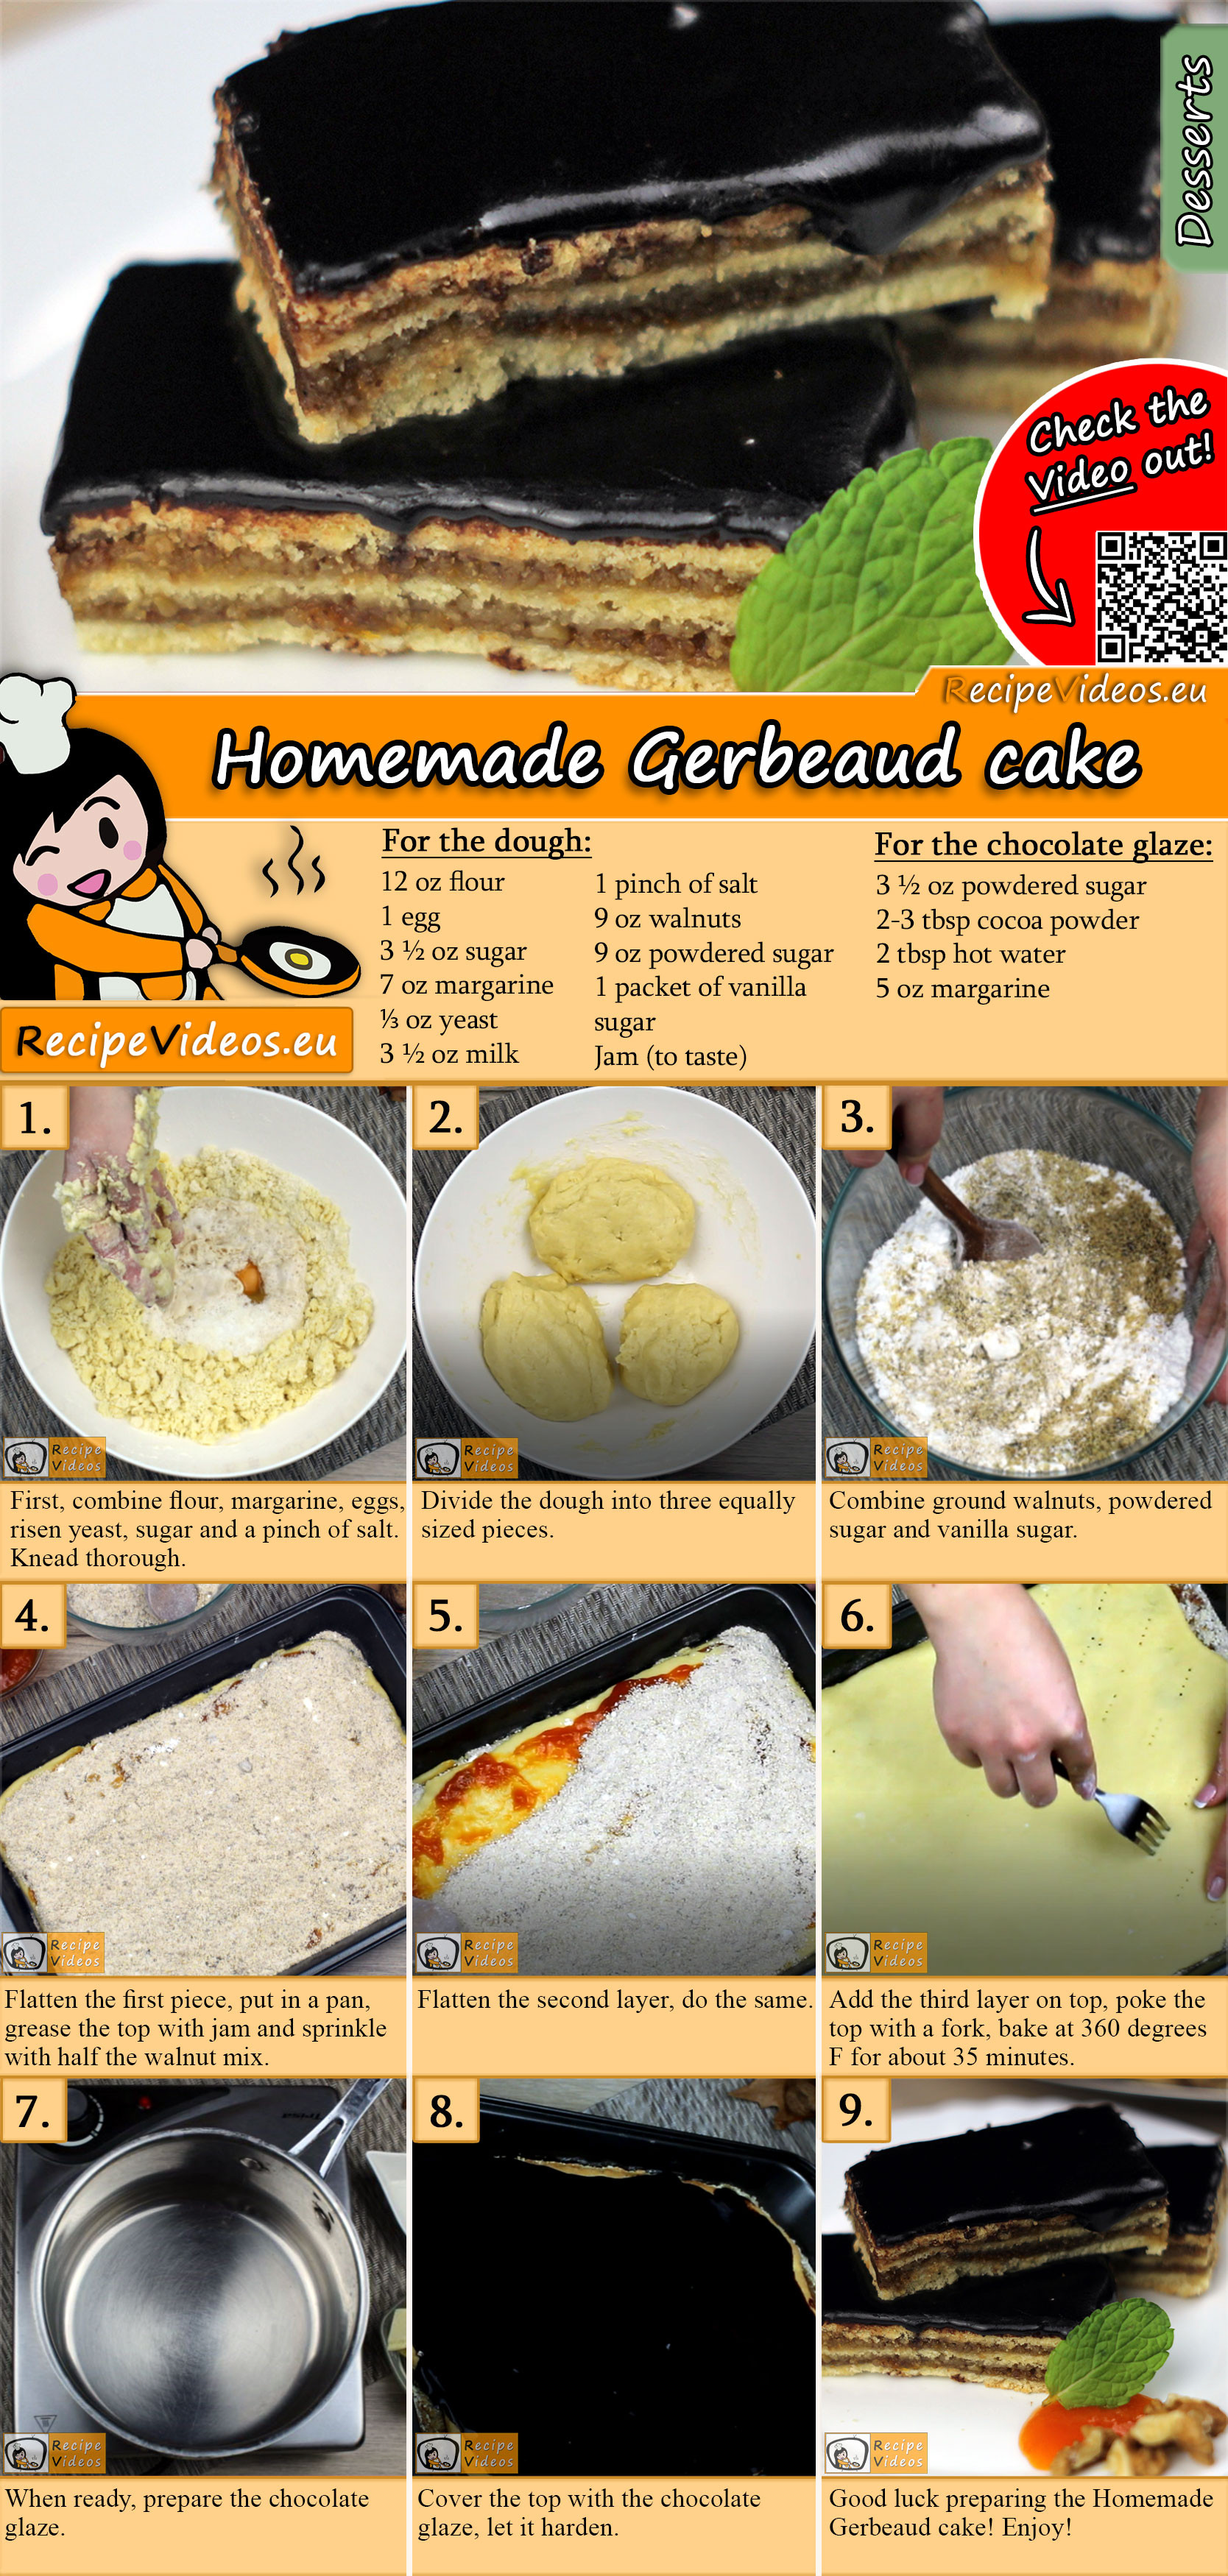 Homemade Gerbeaud cake recipe with video